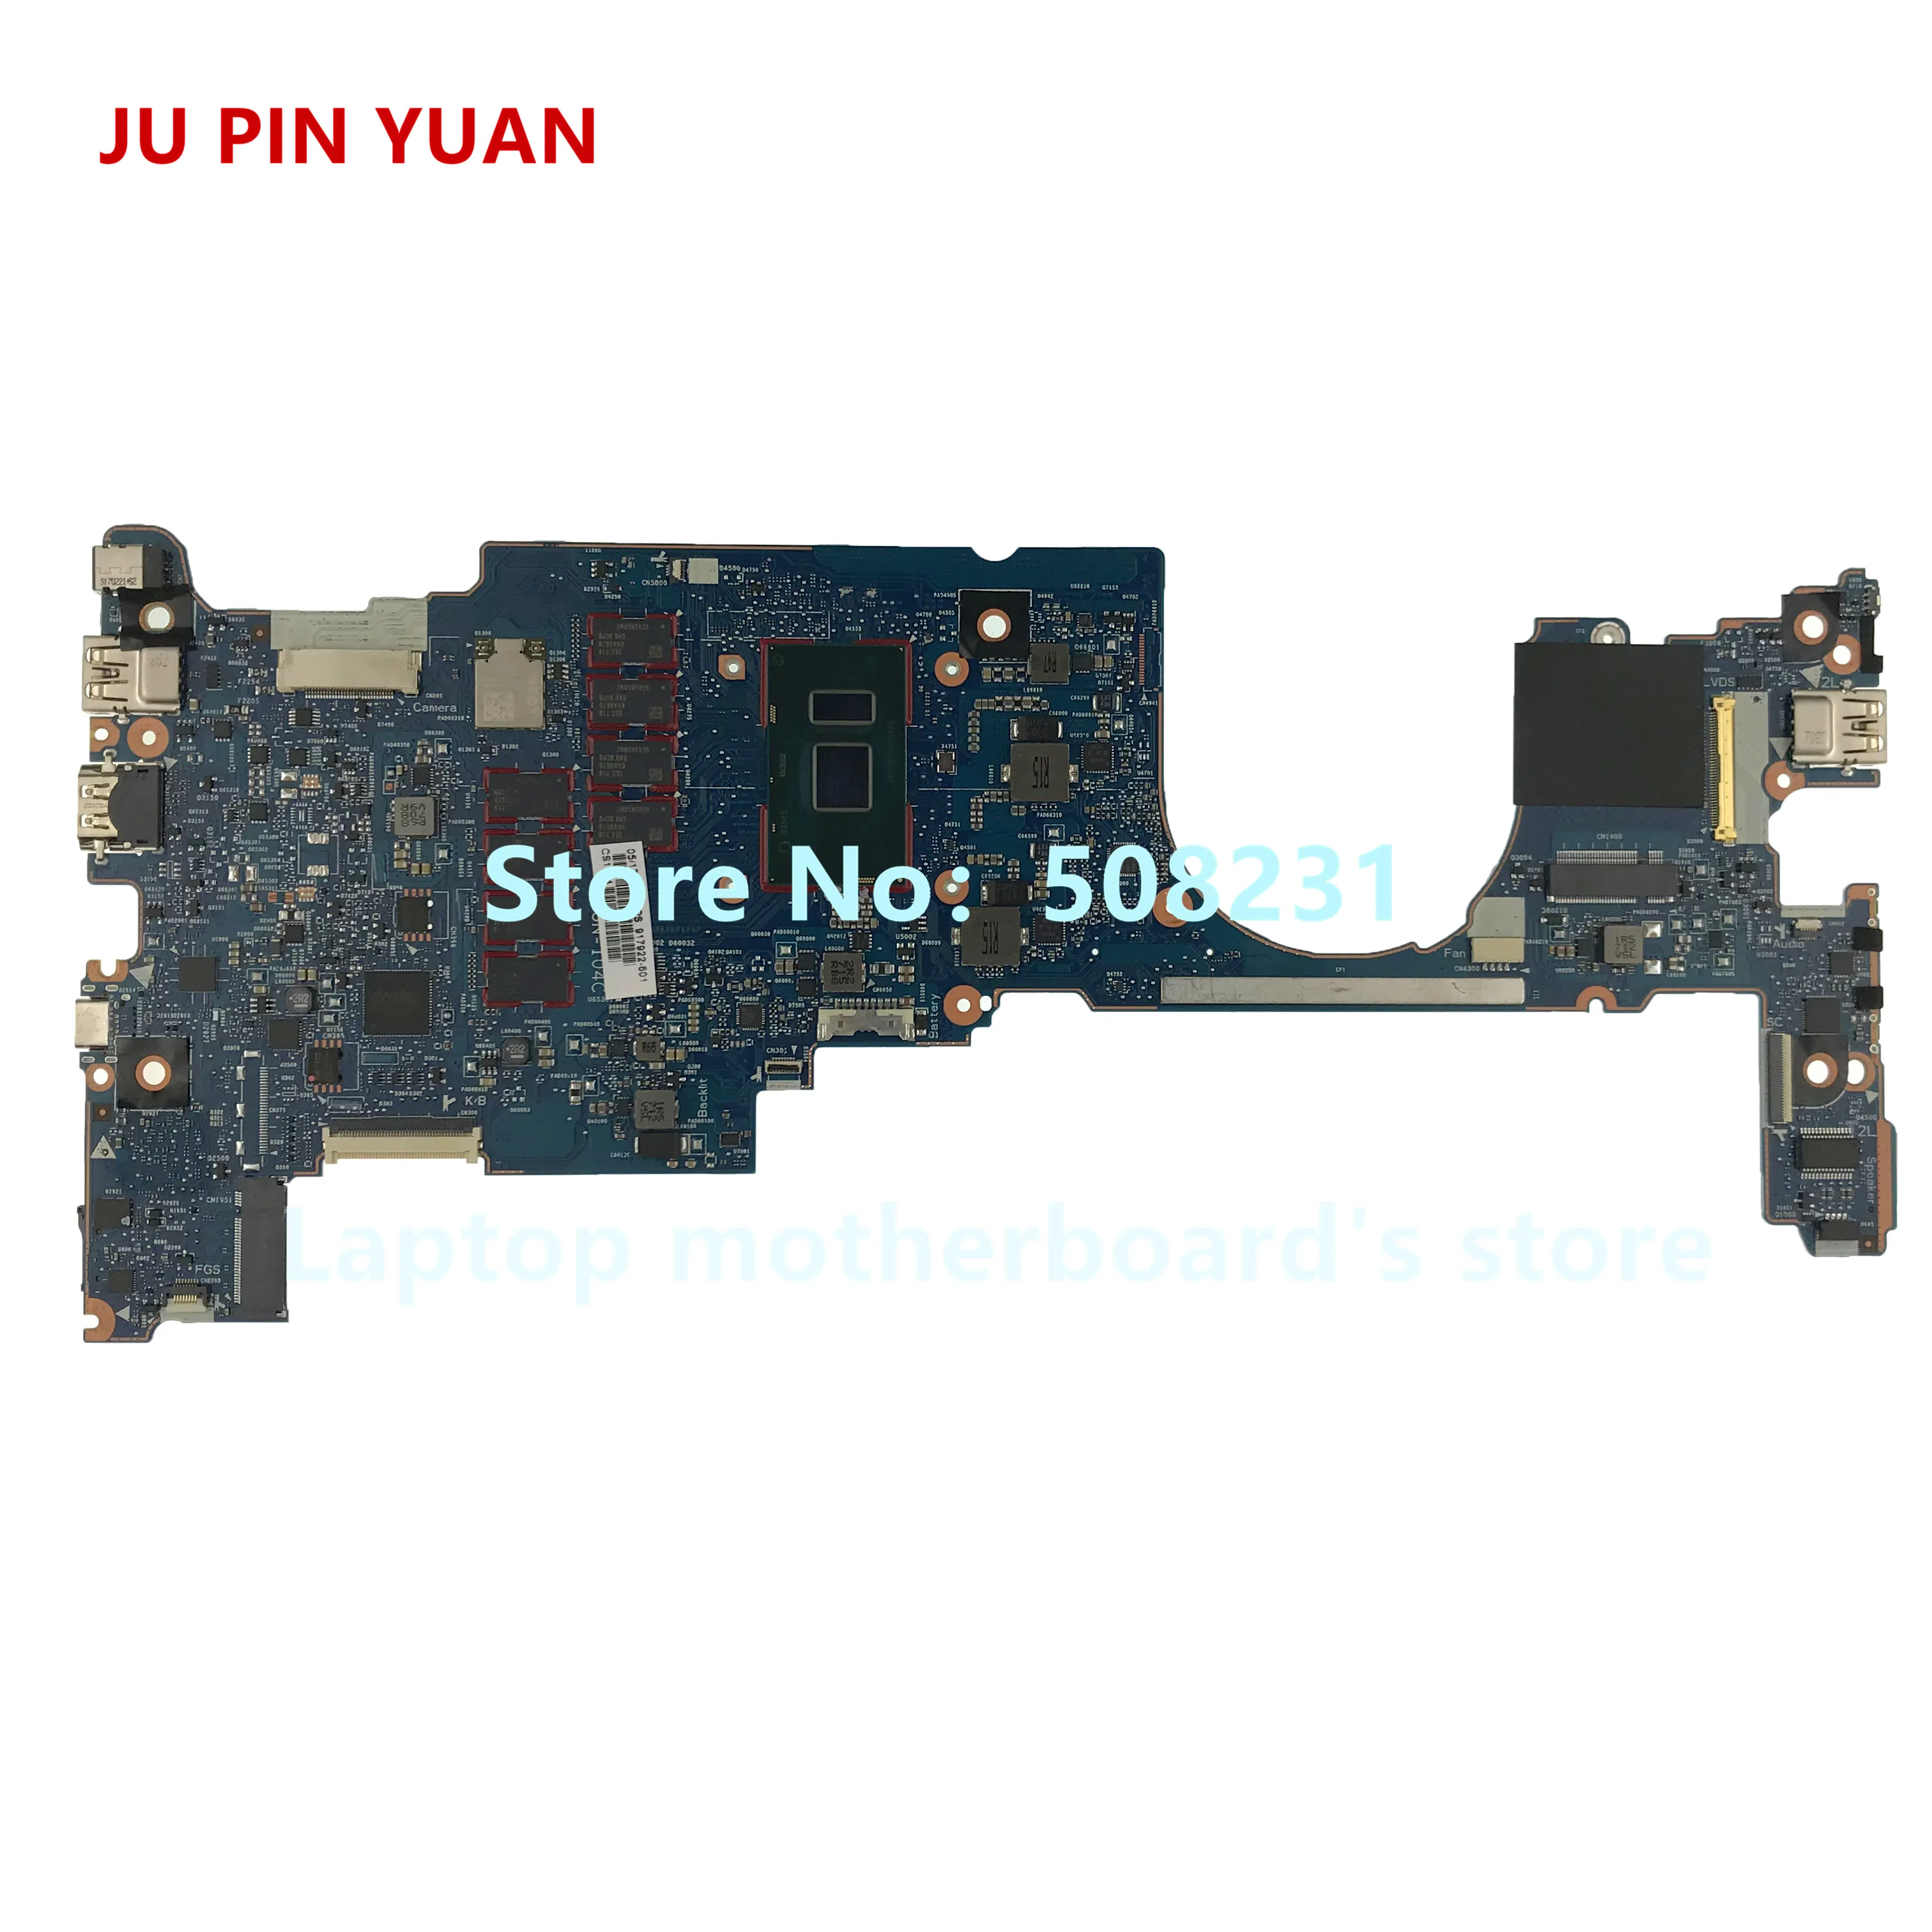 

JU PIN YUAN 917922-601OLDMAN-6050A2848001-MB-A01 Laptop motherboard For HP EliteBook x360 1030 G2 PC i5-7200U 8GB fully Tested